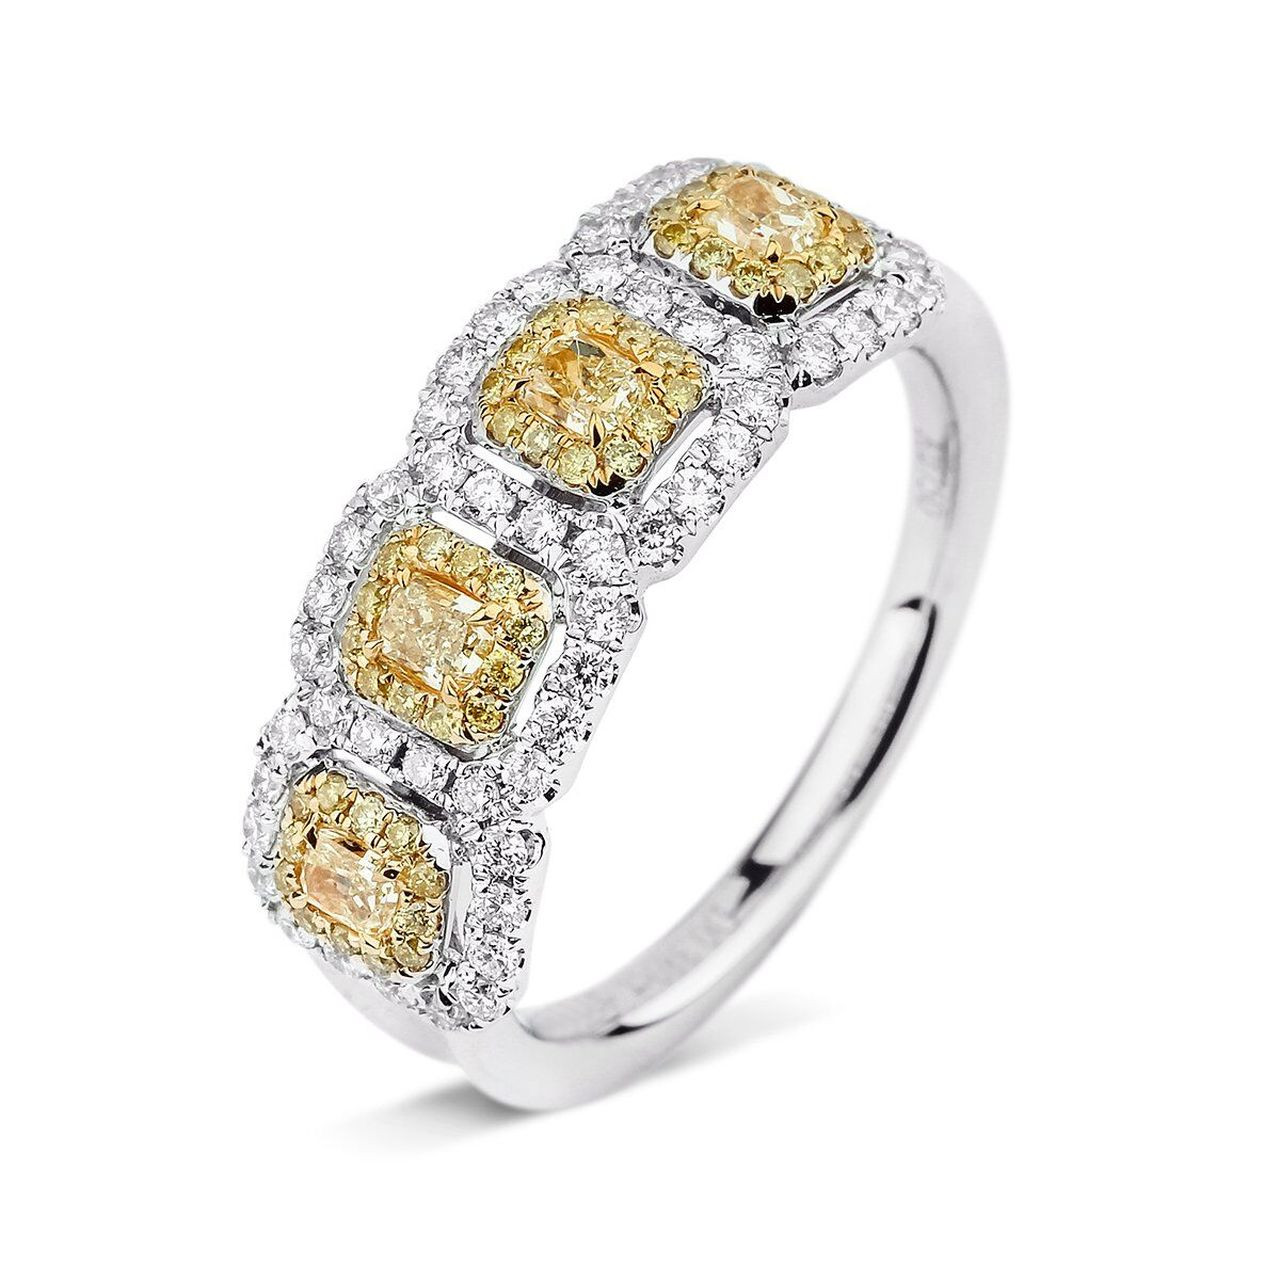 Yellow Diamond Wedding Rings
 18kt White and Yellow Gold 4 Stone Double Halo Yellow